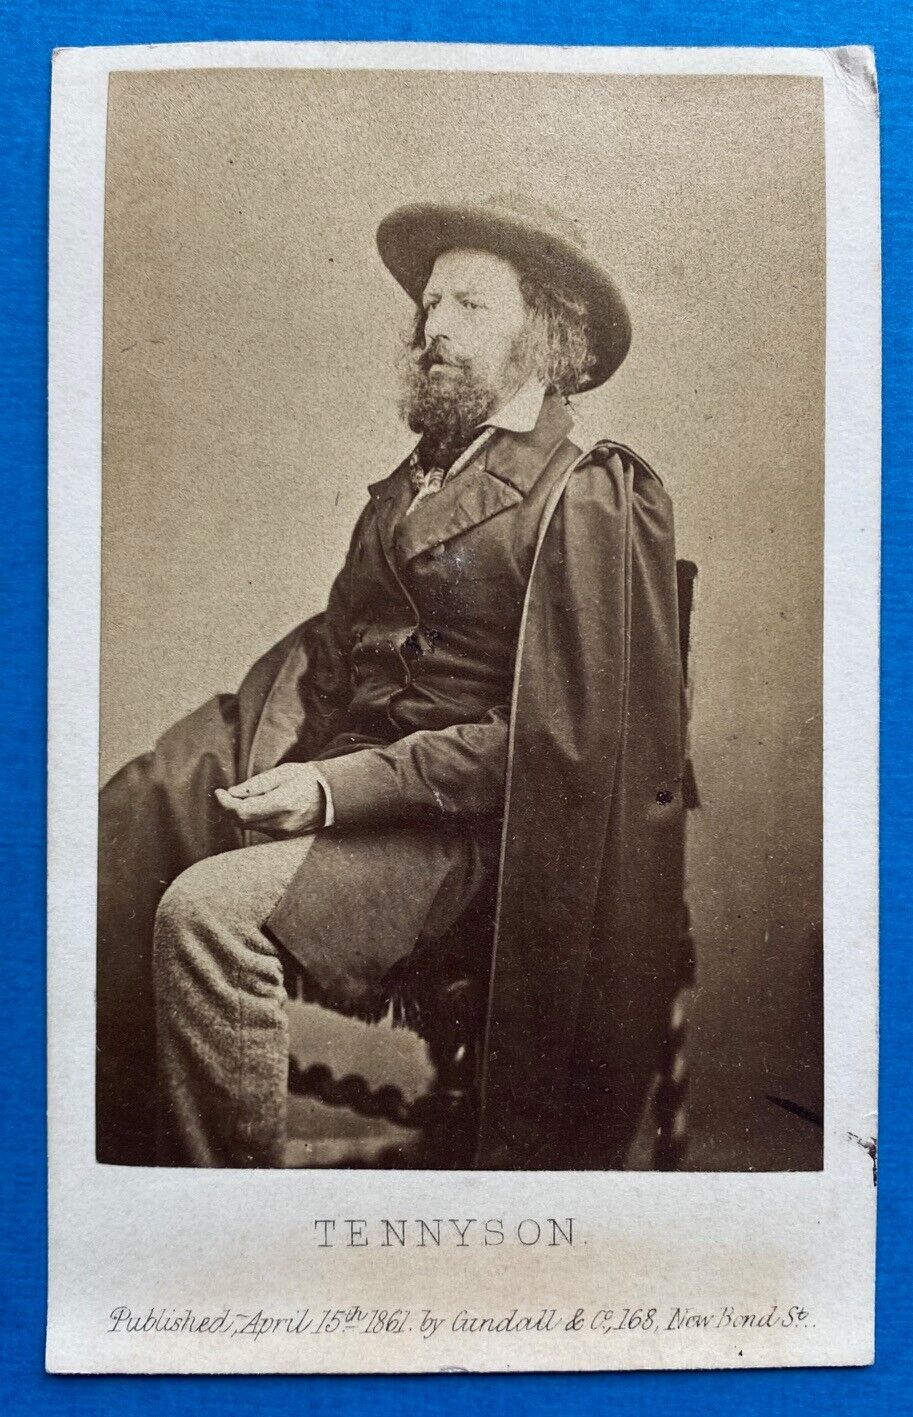 CDV Alfred Lord Tennyson poet Cundall & Co. London April 1861